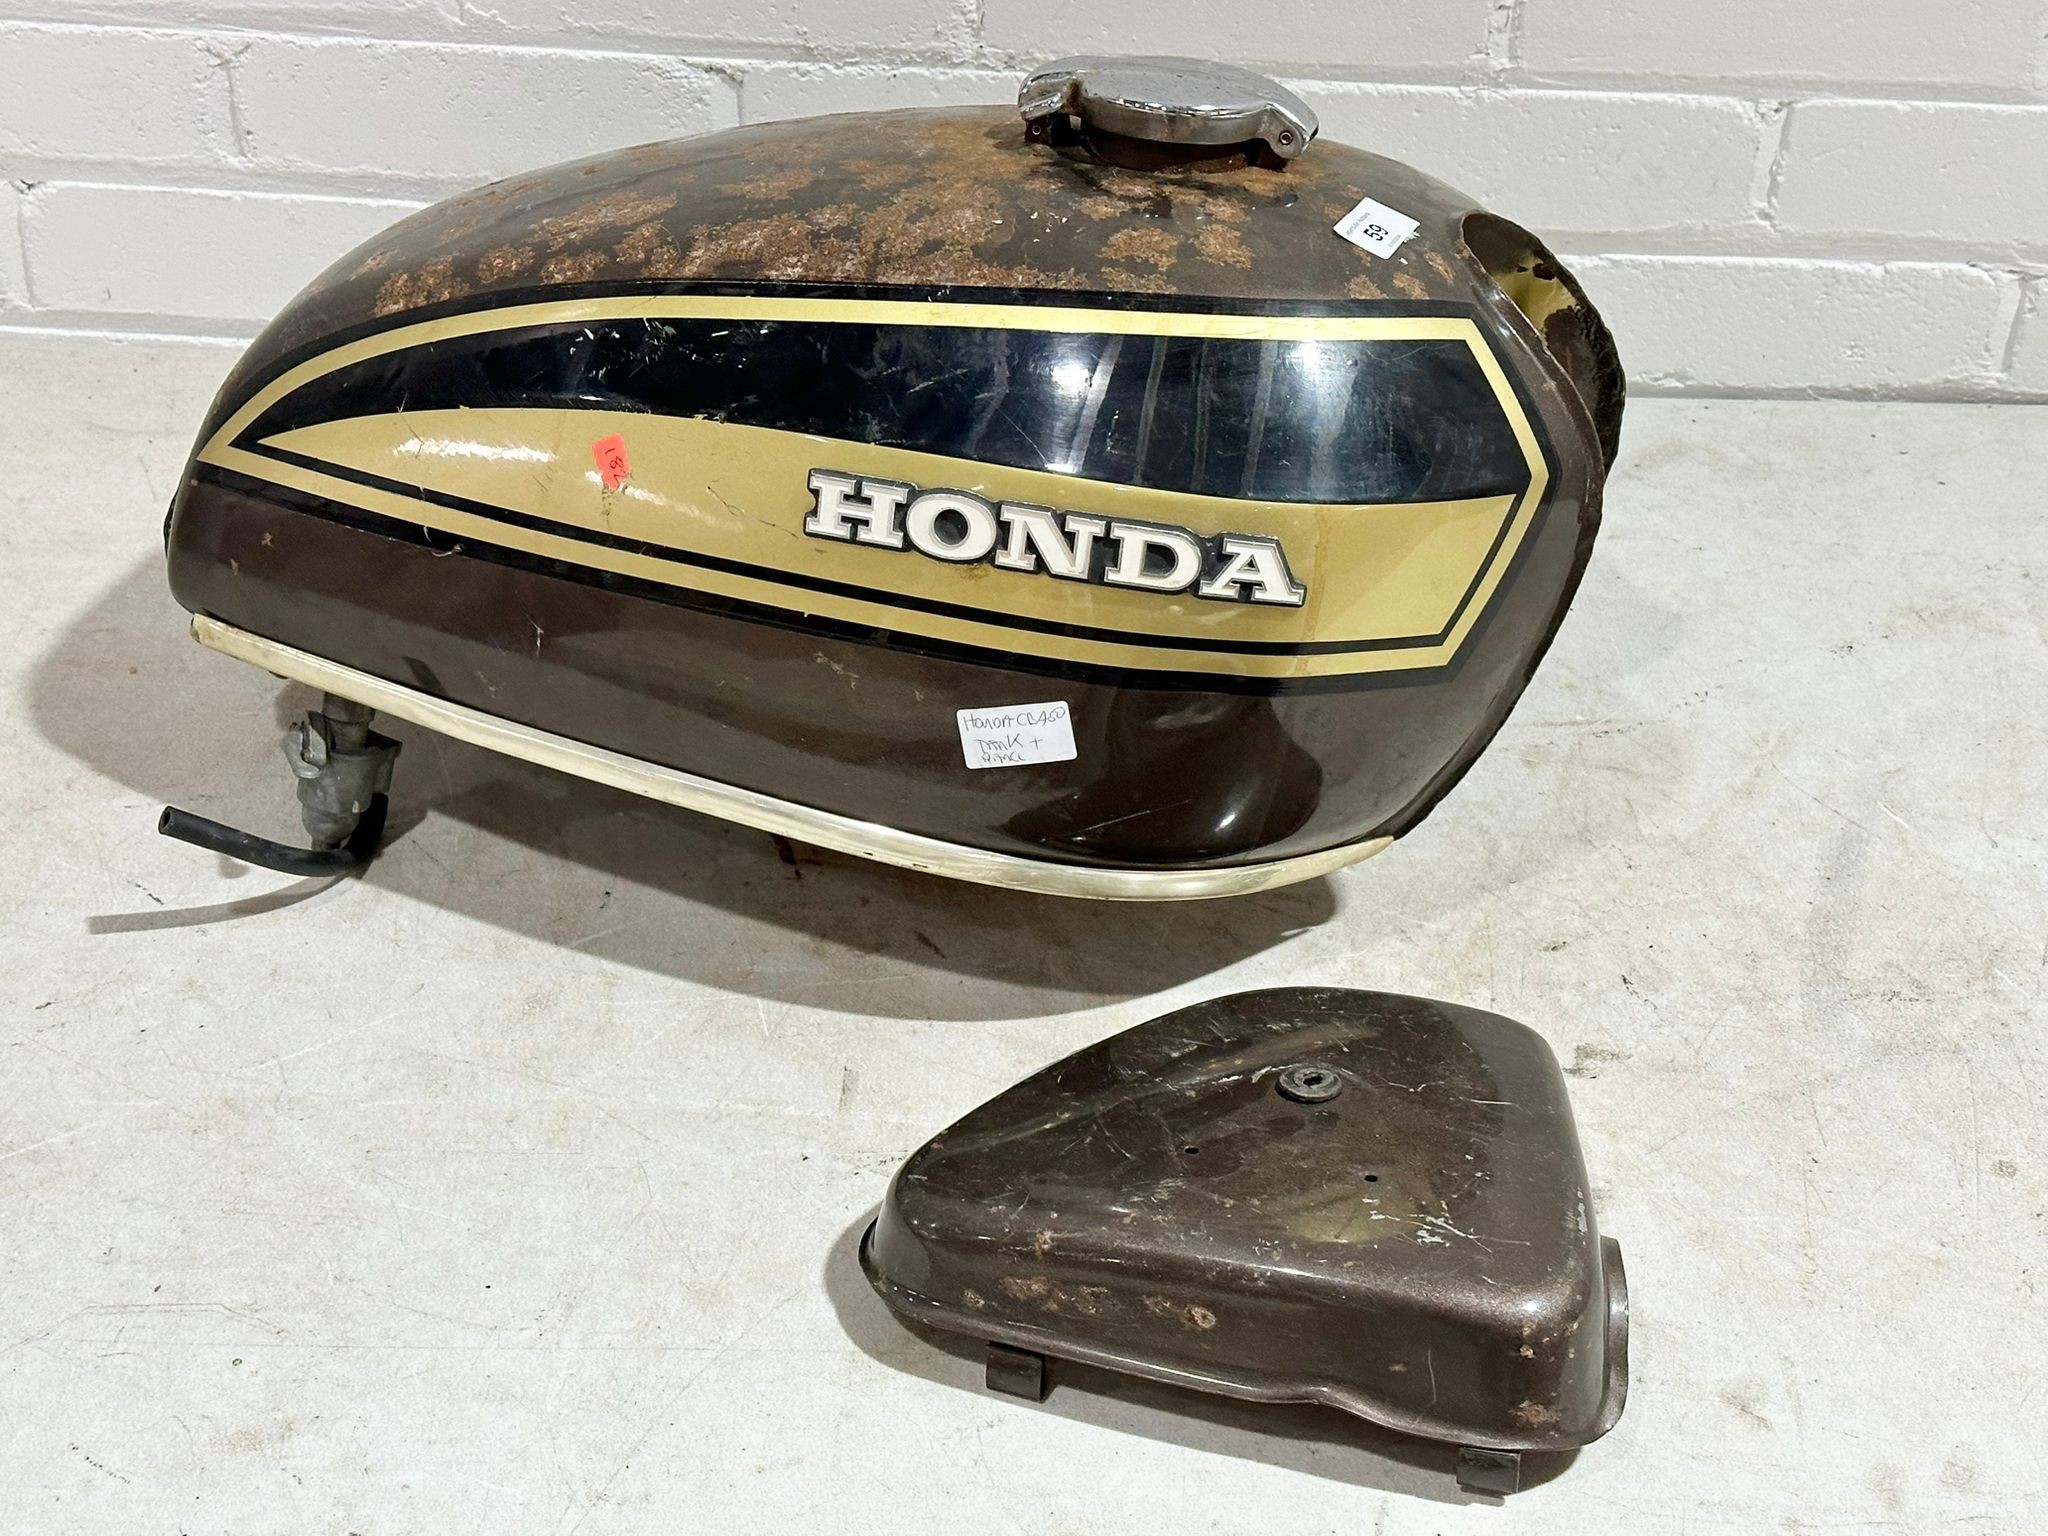 A Honda CB450 tank and side panel